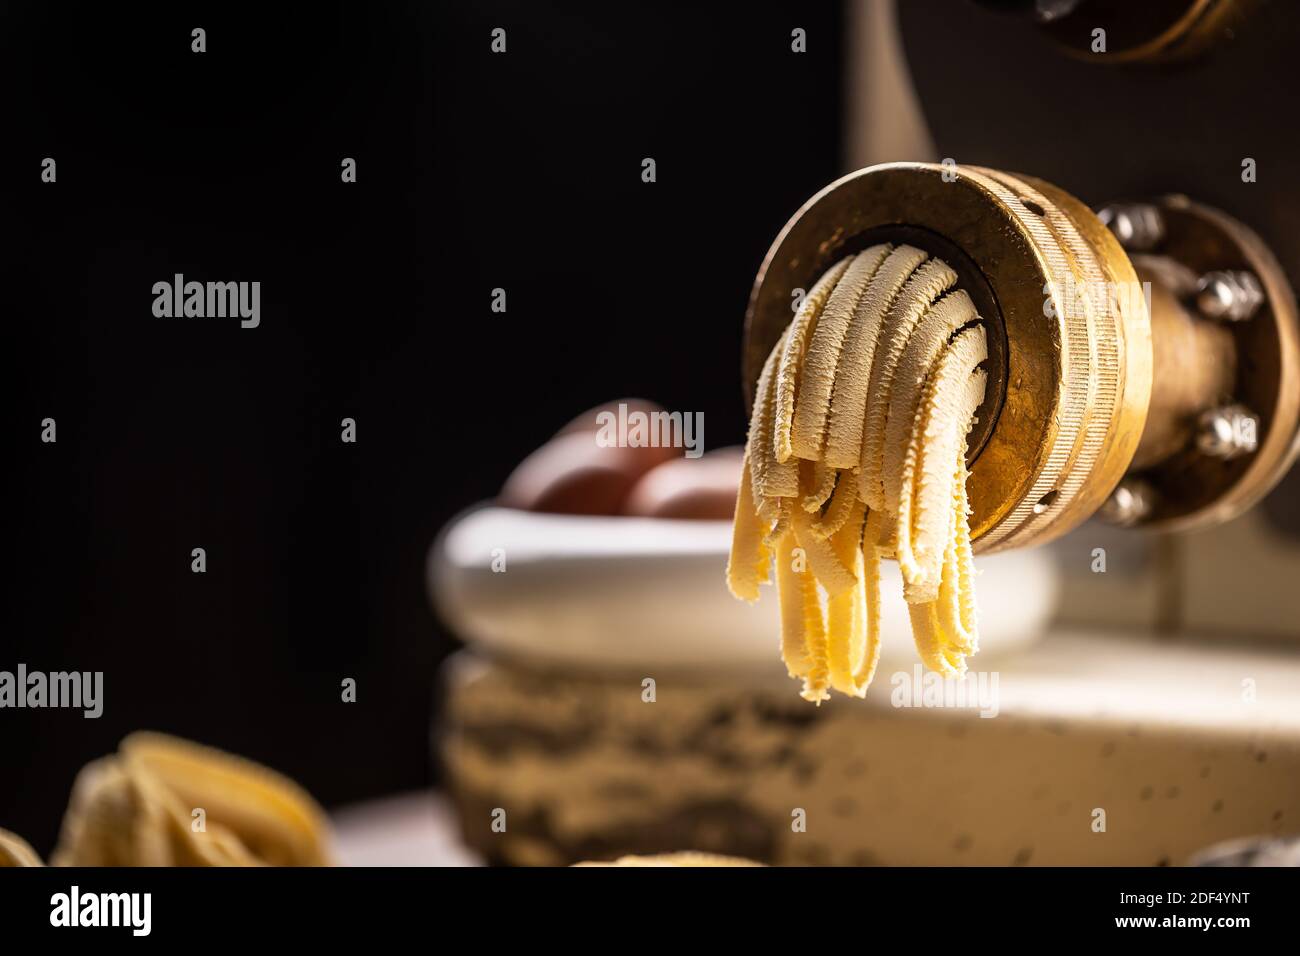 Macaroni machine hi-res stock photography and images - Alamy